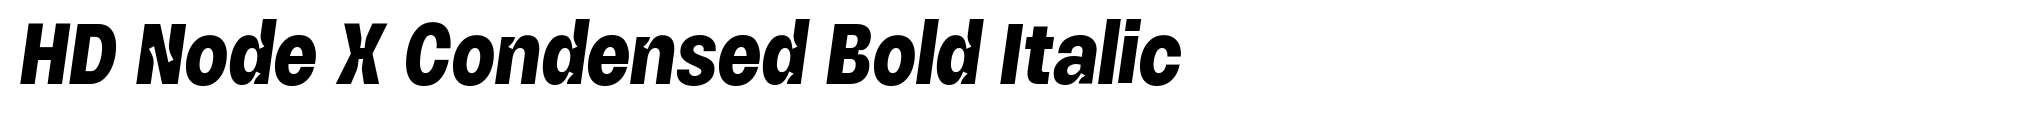 HD Node X Condensed Bold Italic image